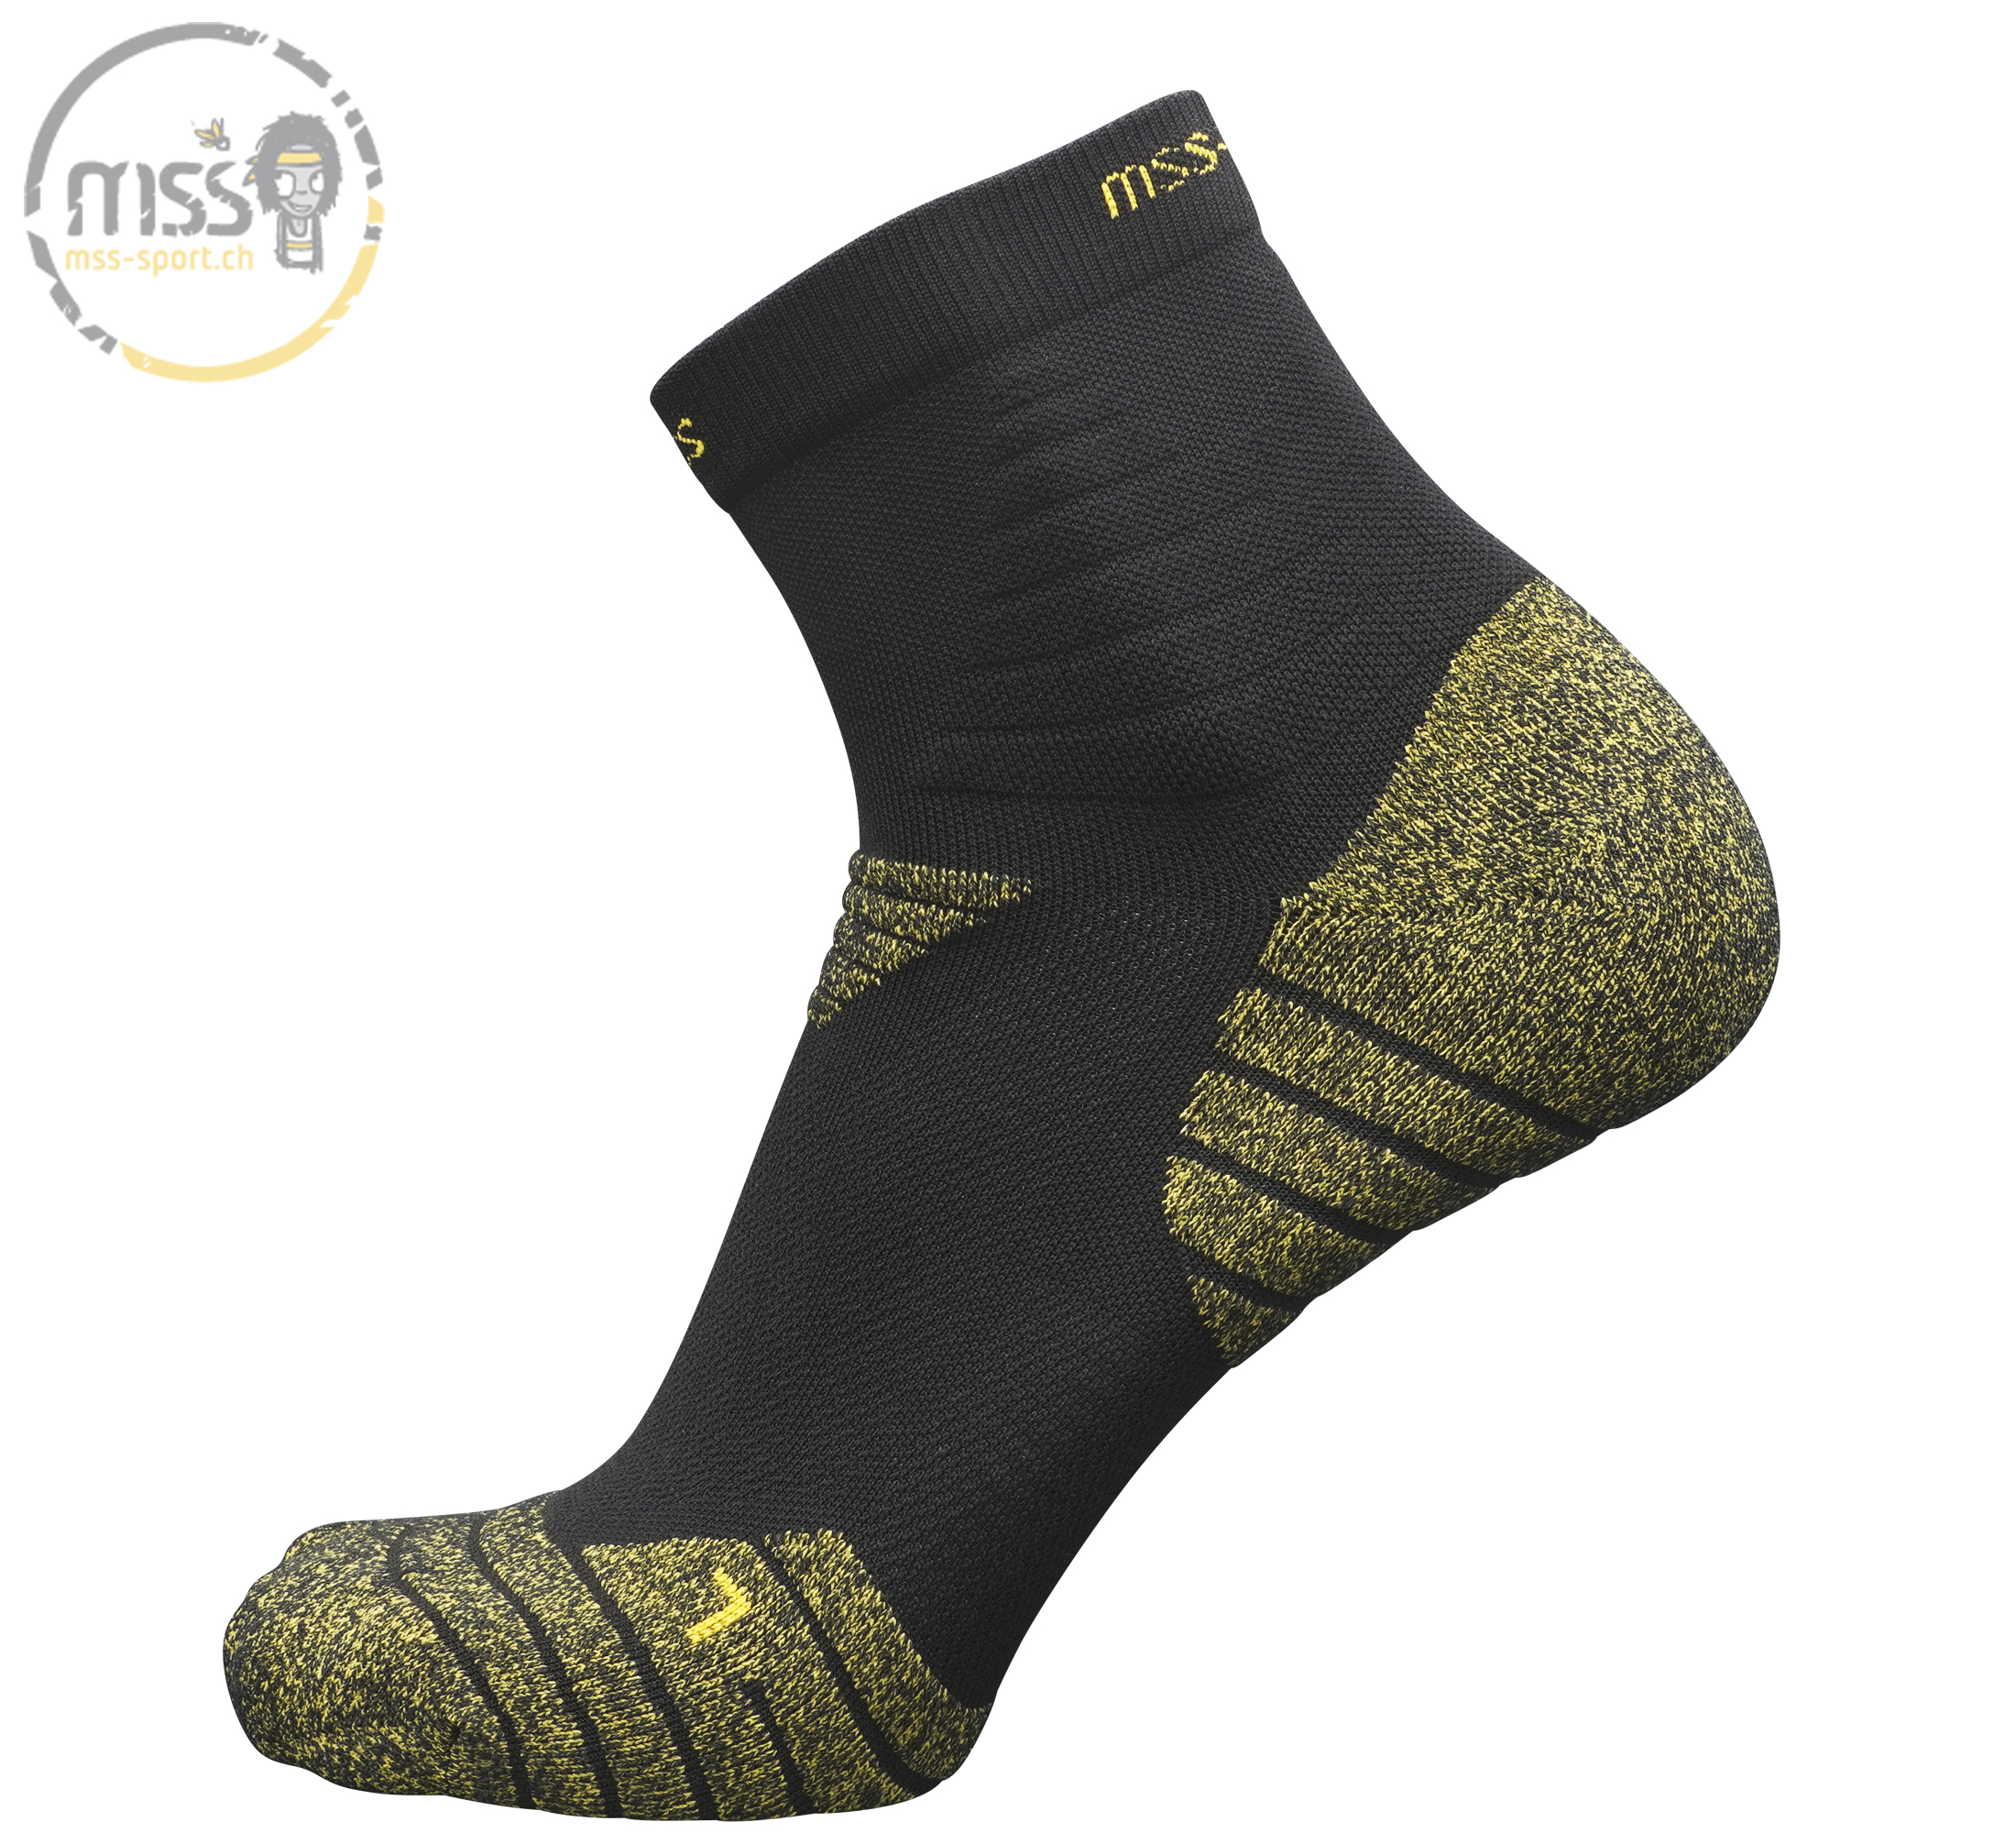 mss-socks GO 7500 mid Men black yellow